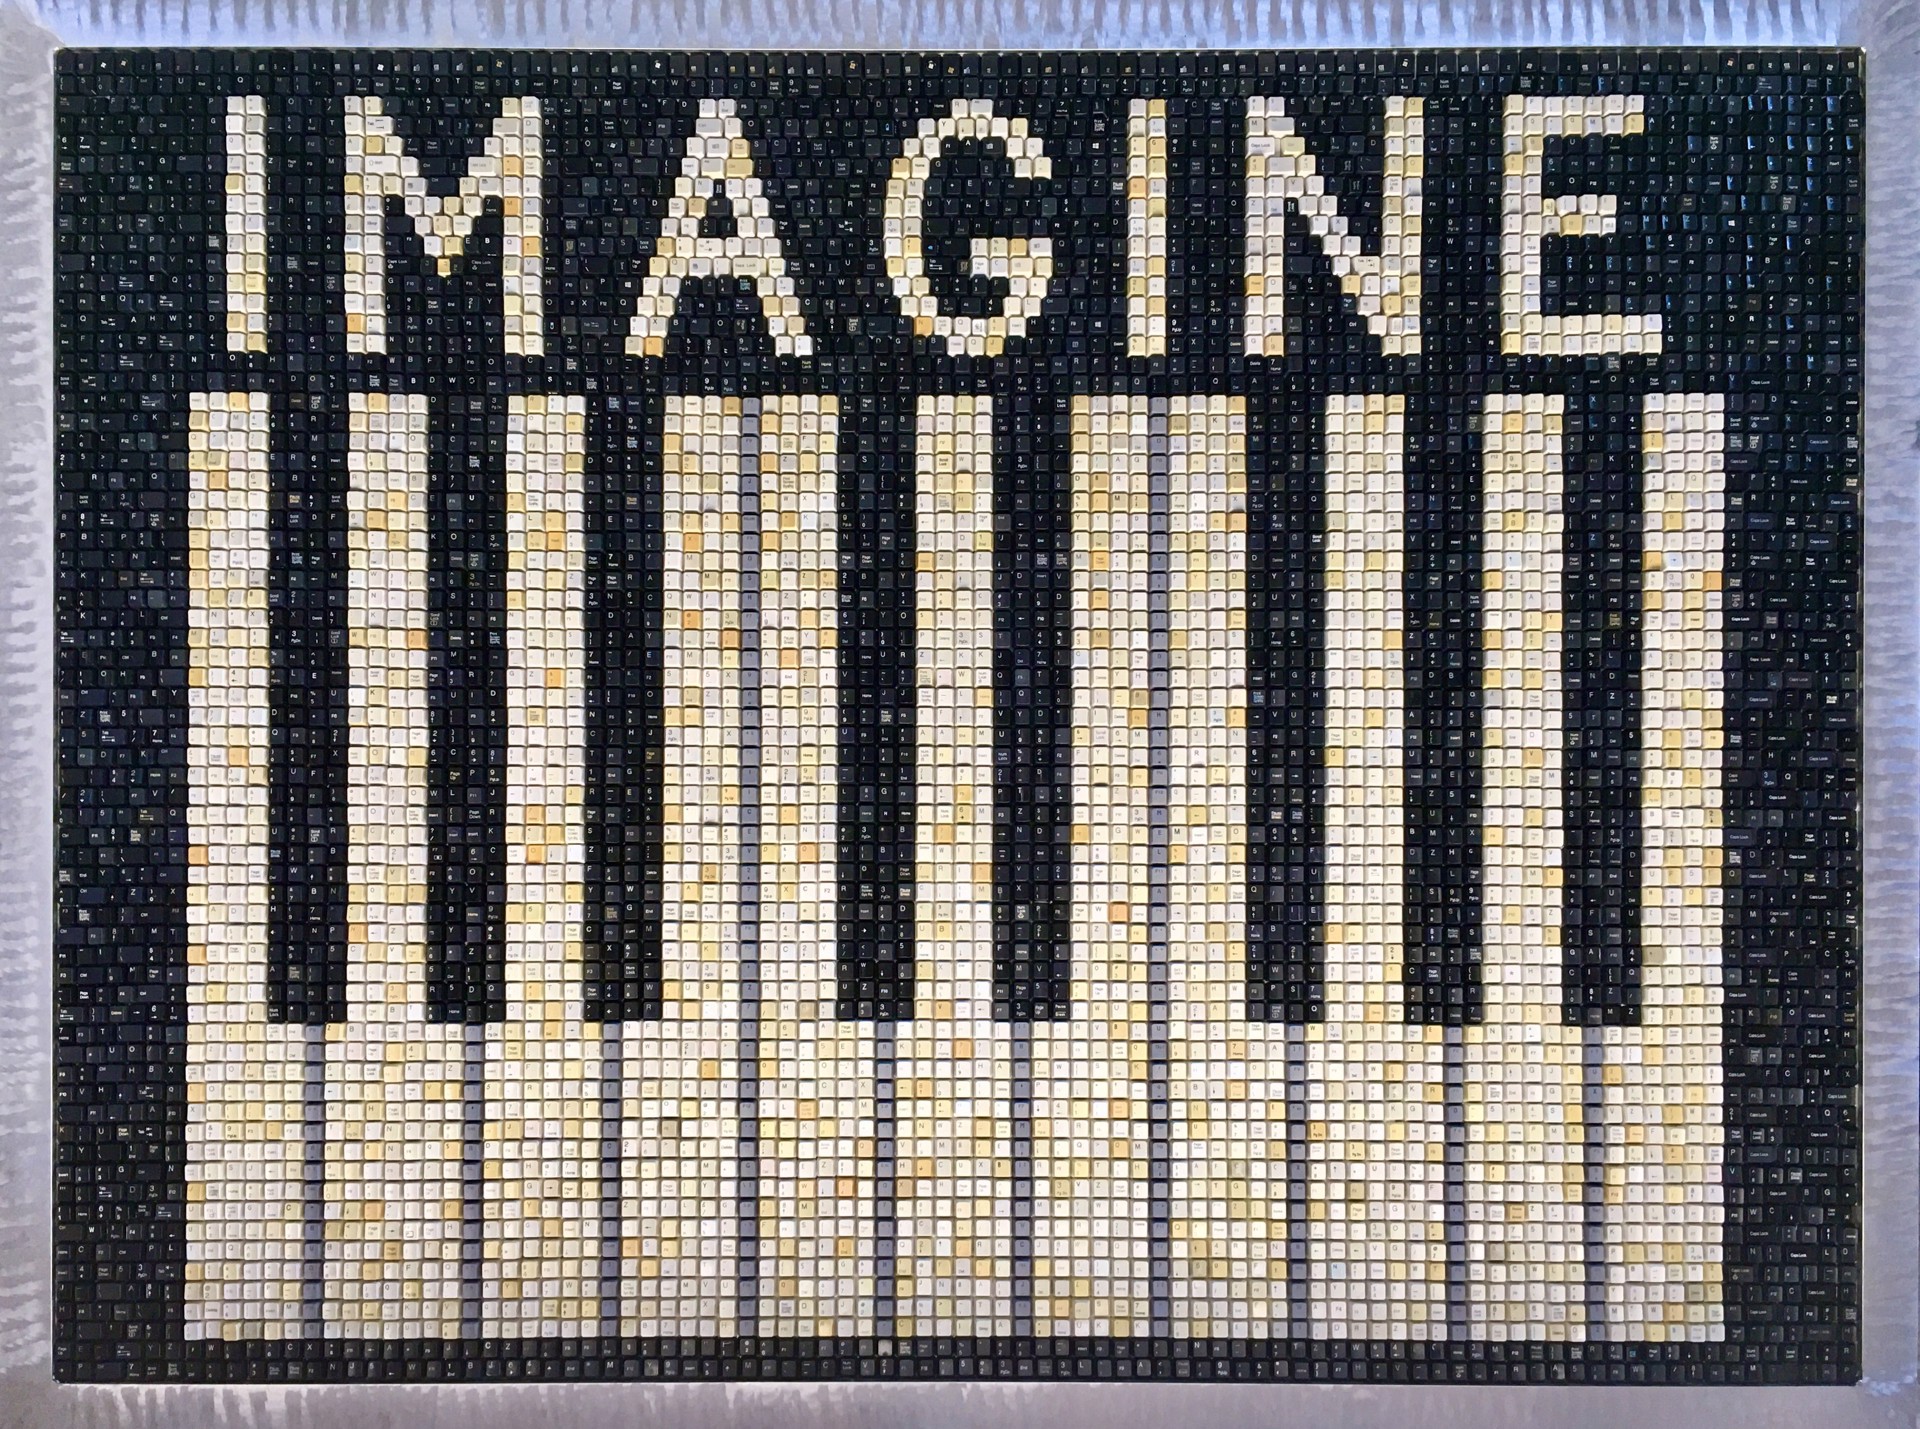 Imagine Piano Keys by Doug Powell